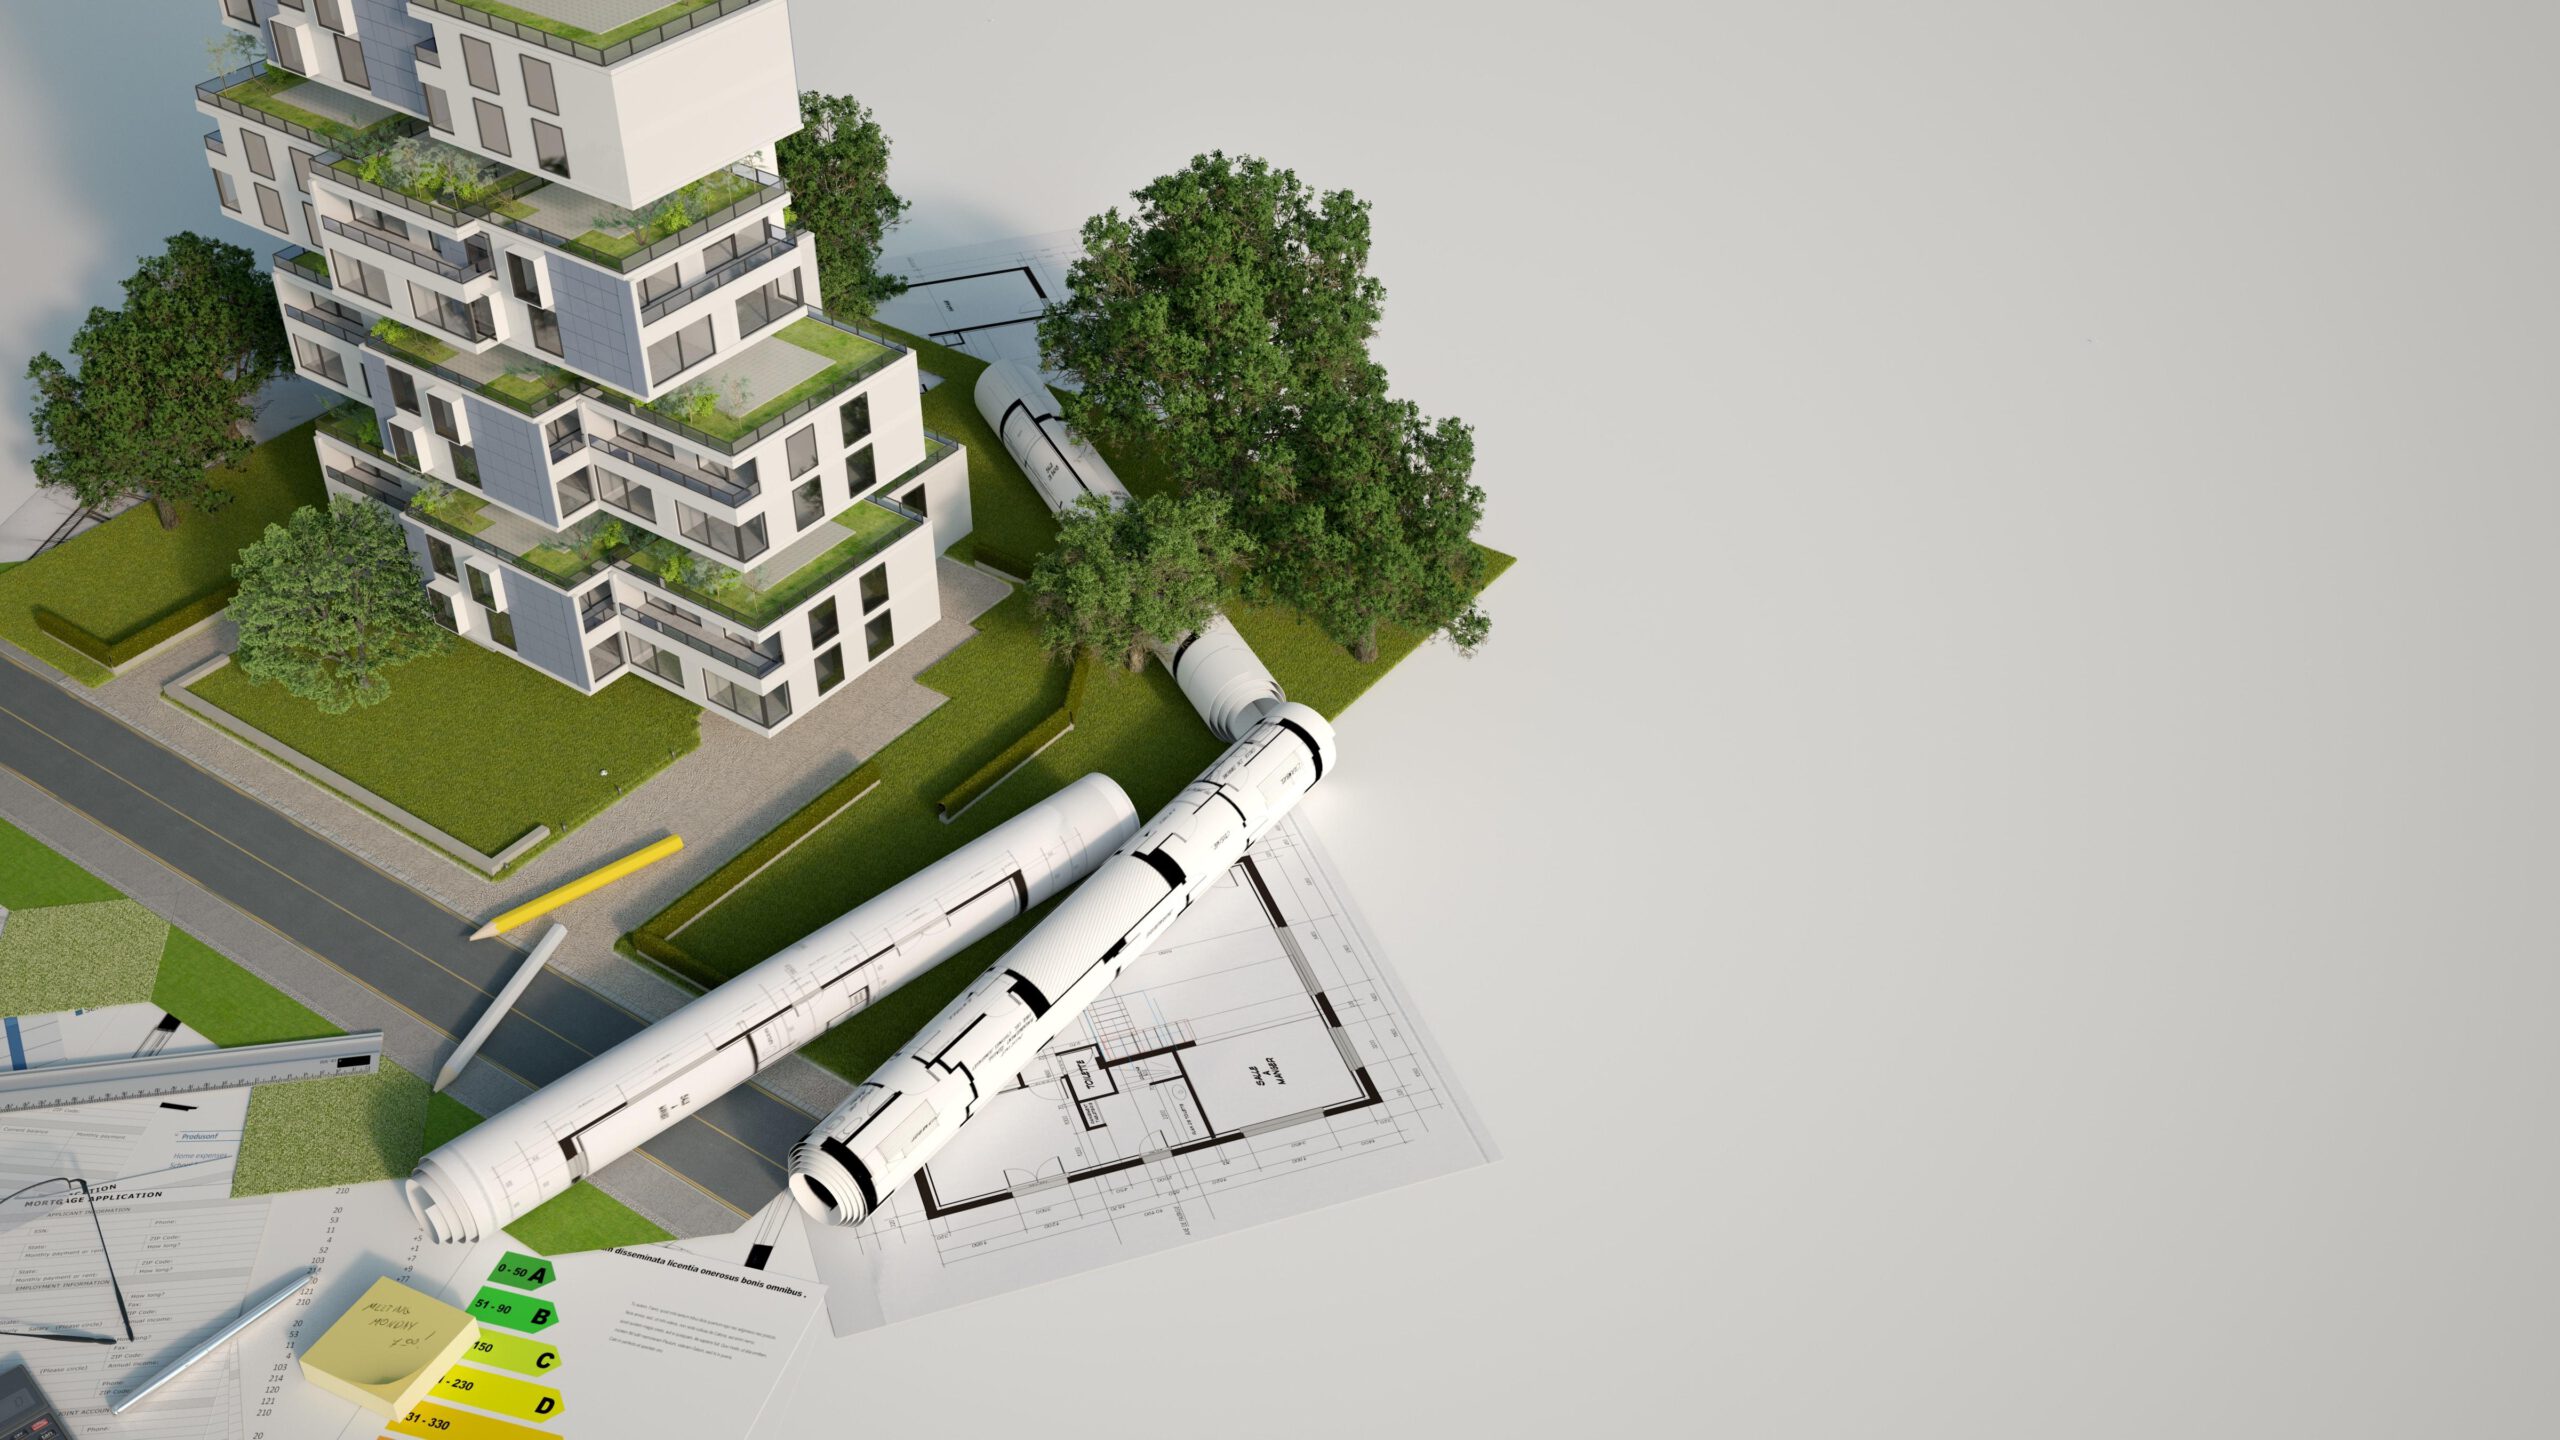 design through construction process for green buildings